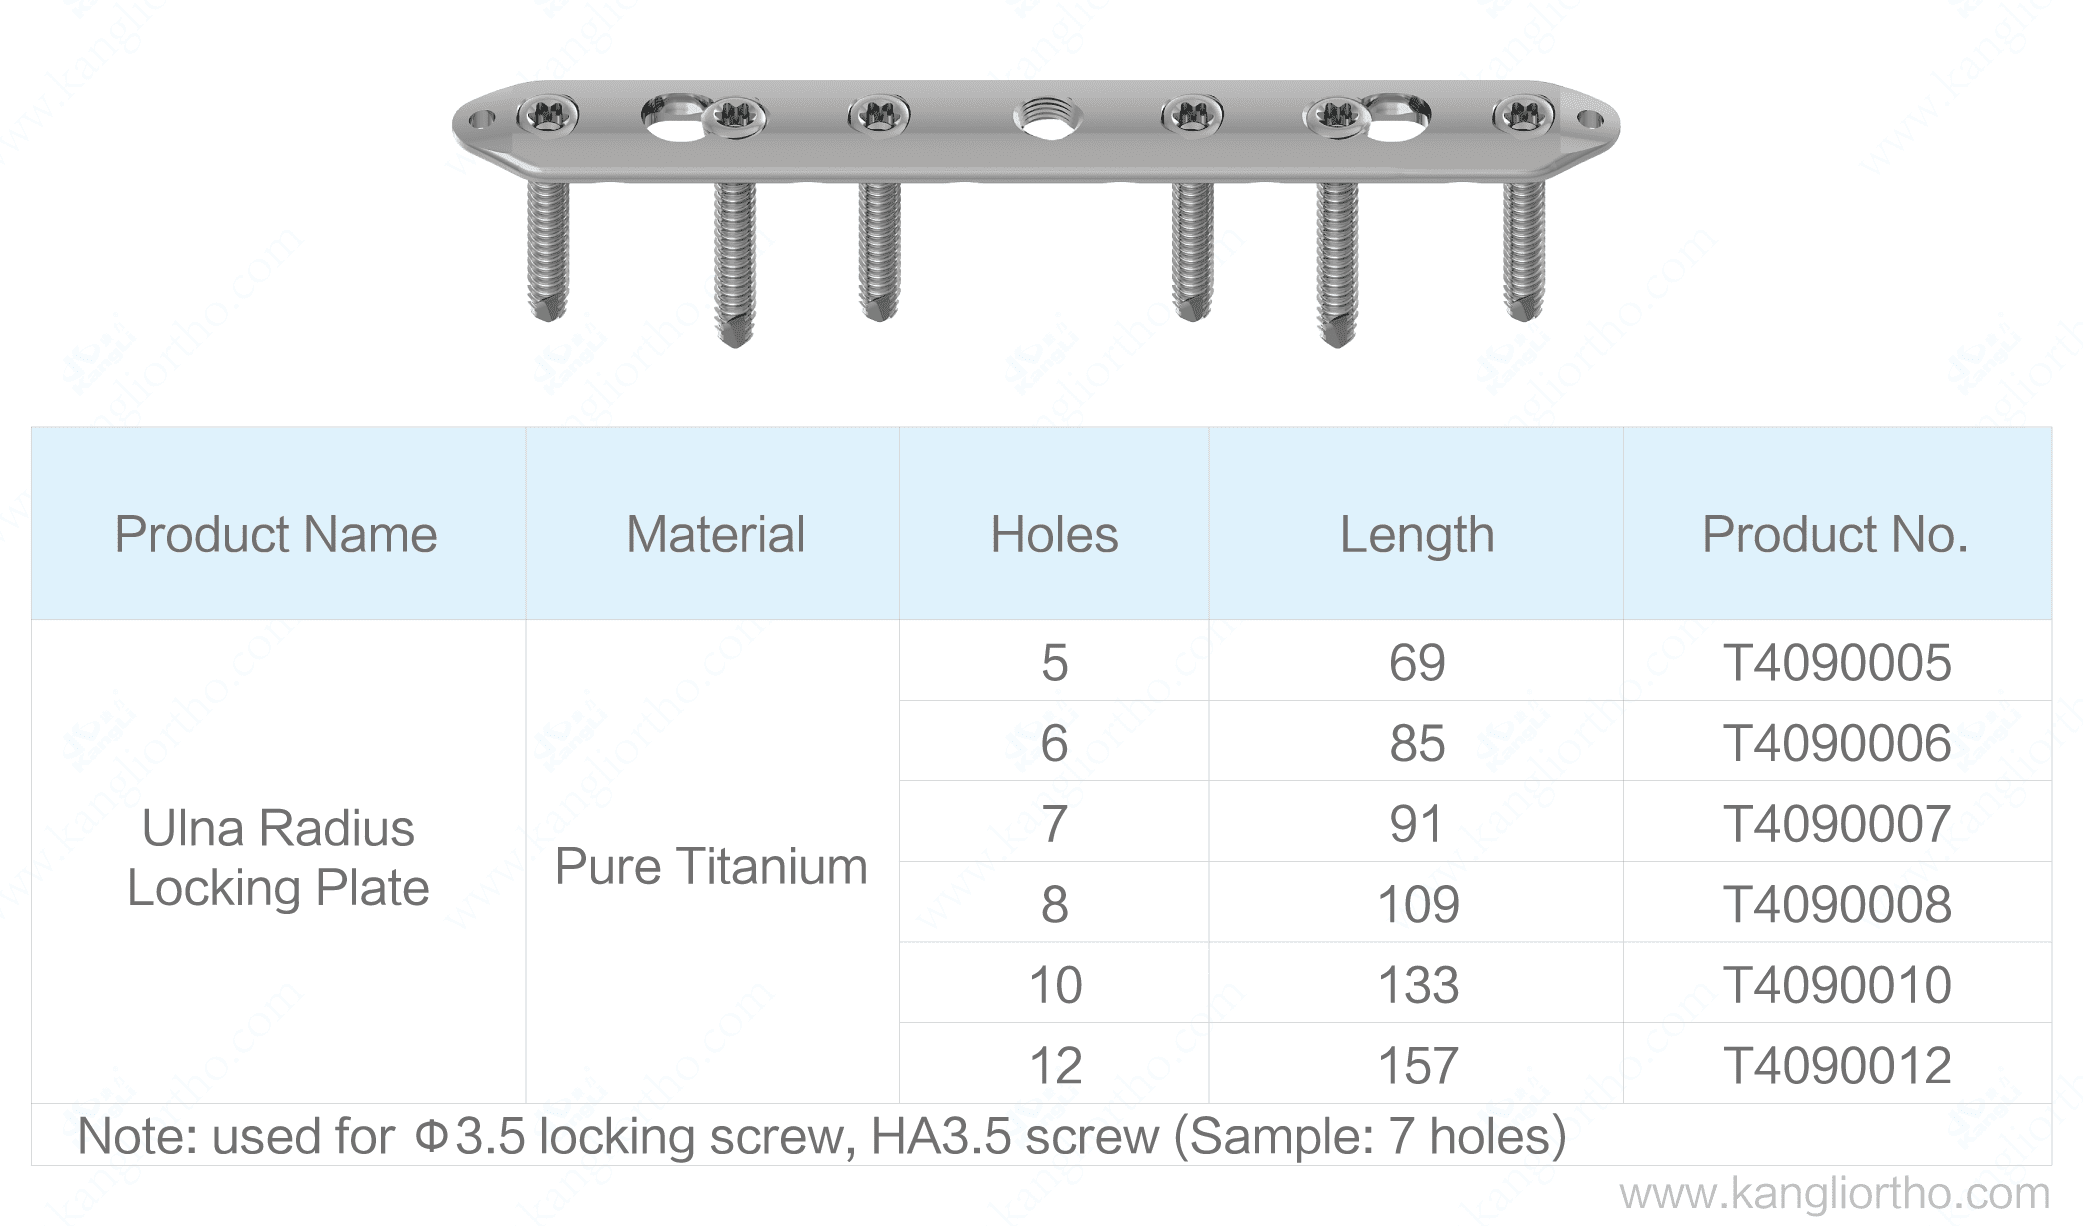 ulna-radius-locking-plate-specifications